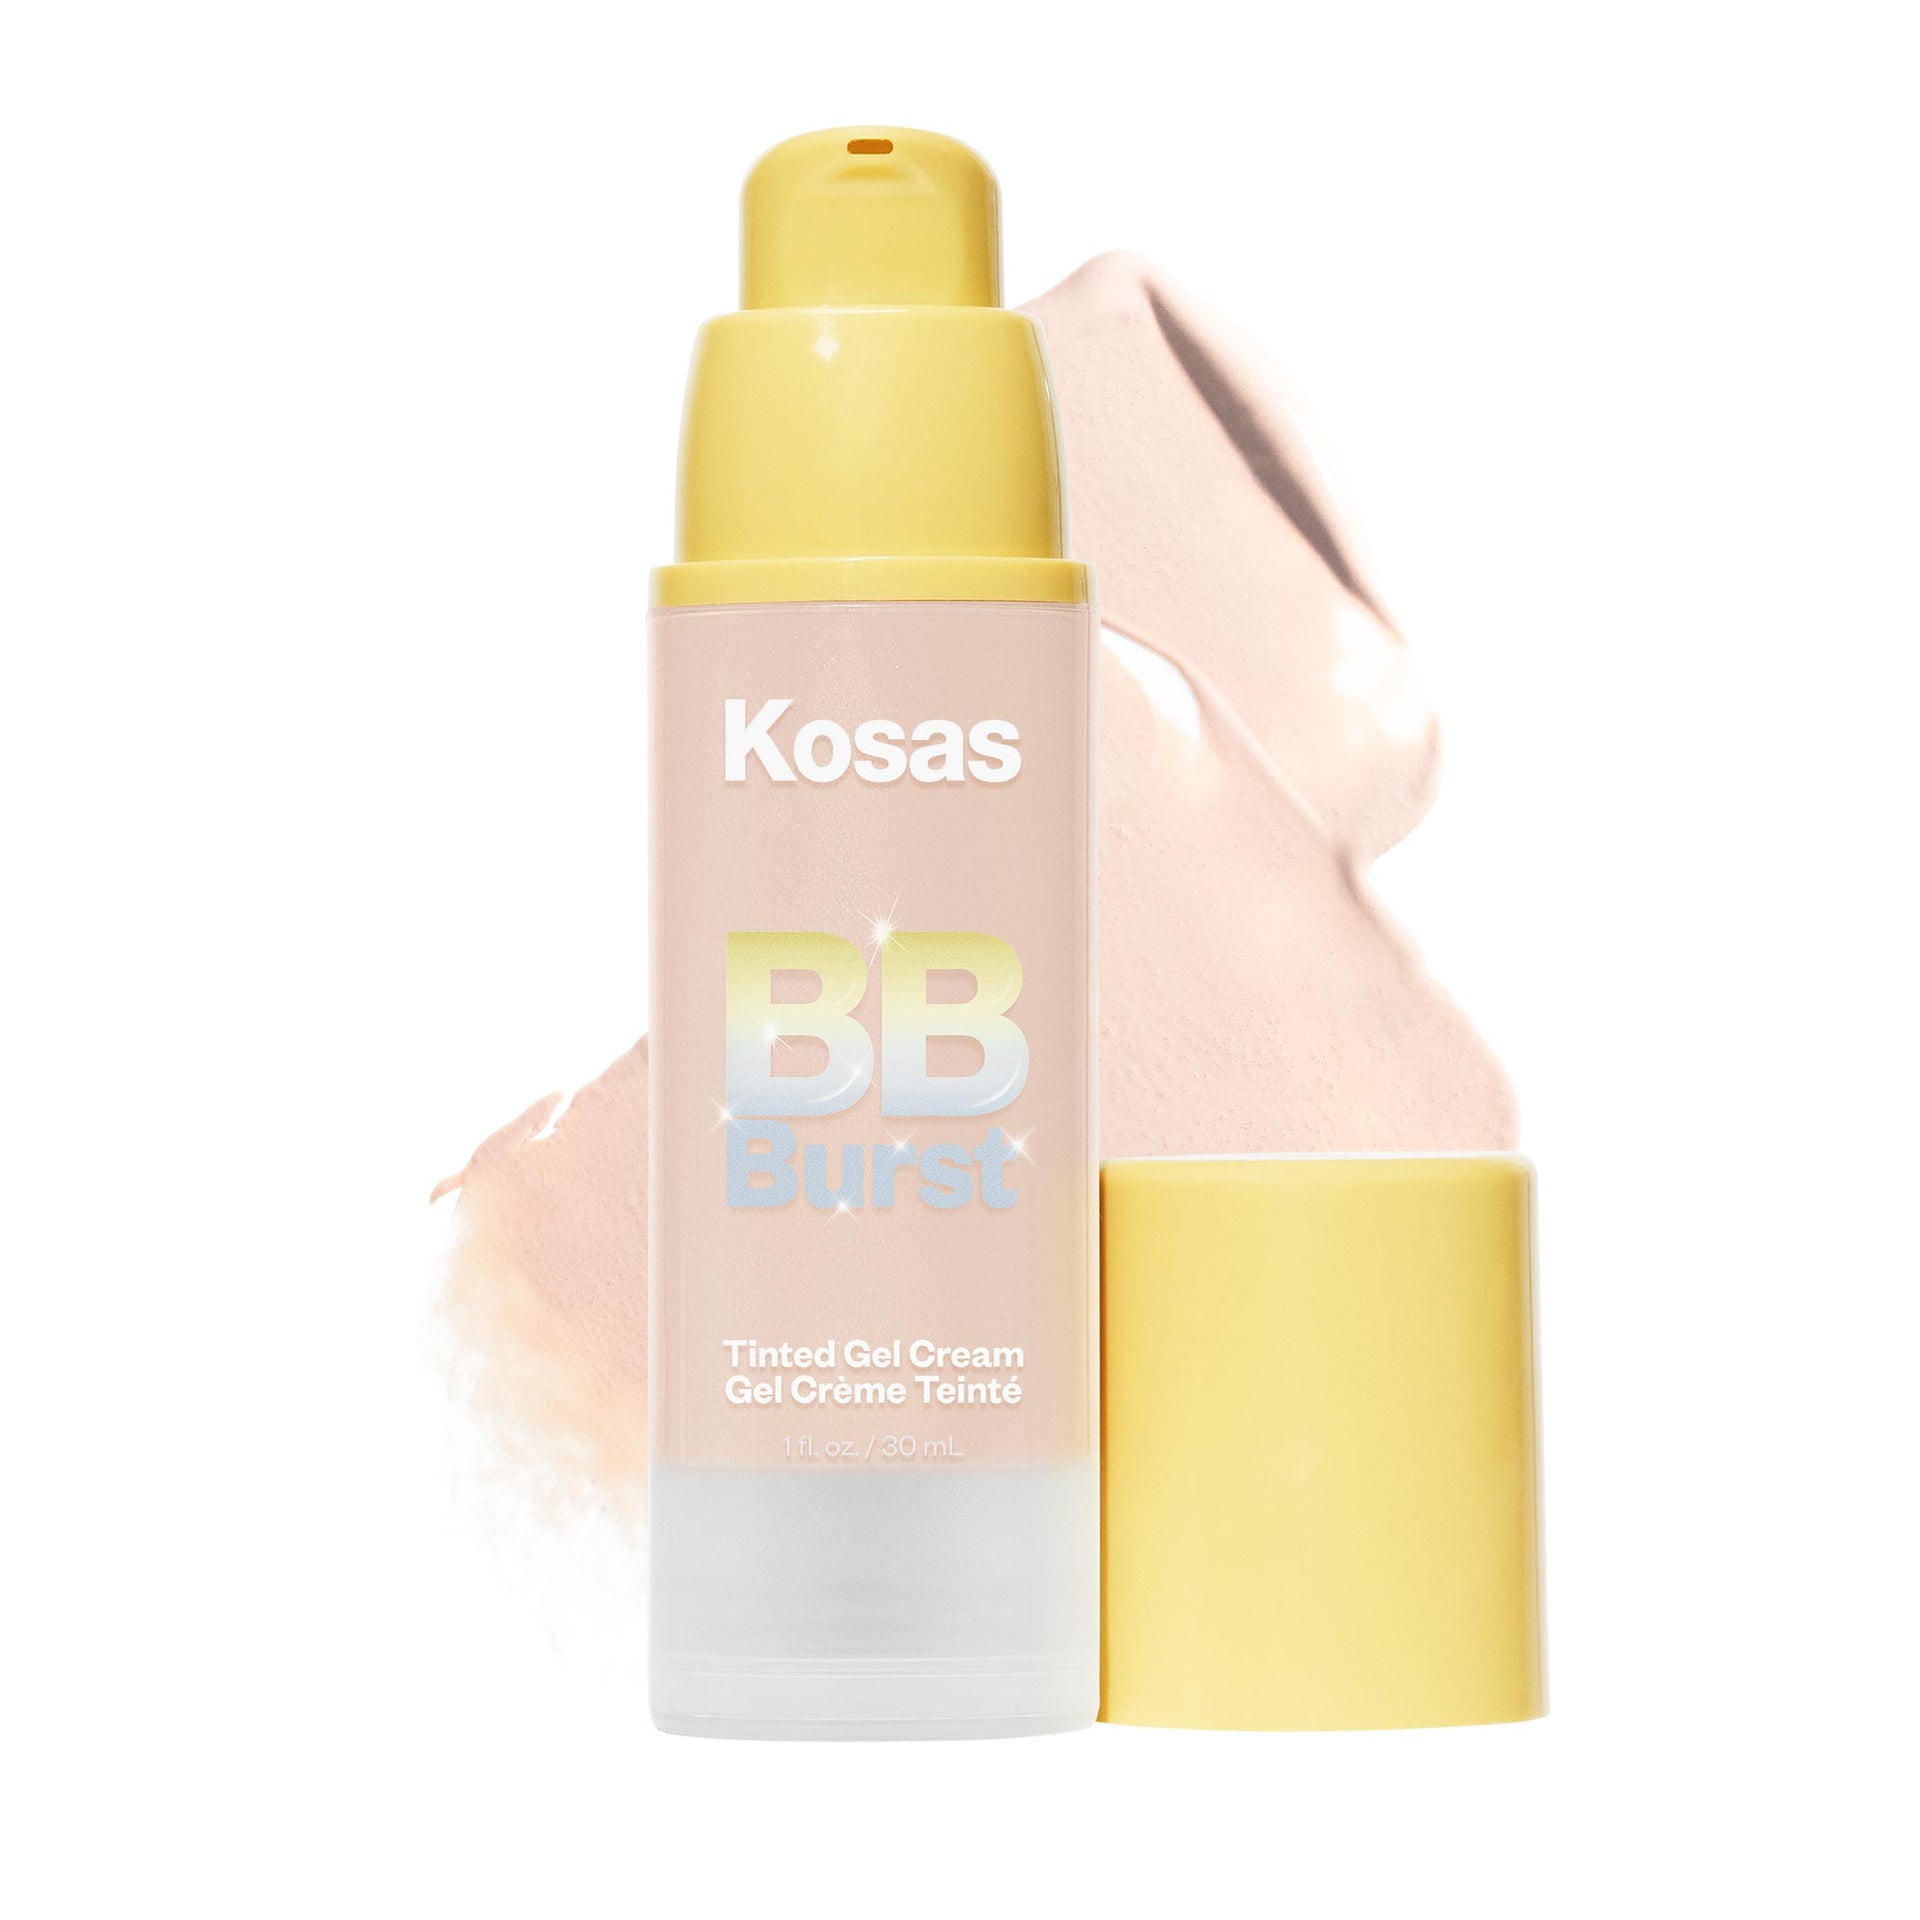 Kosas BB Burst in the shade Very Light Cool 11